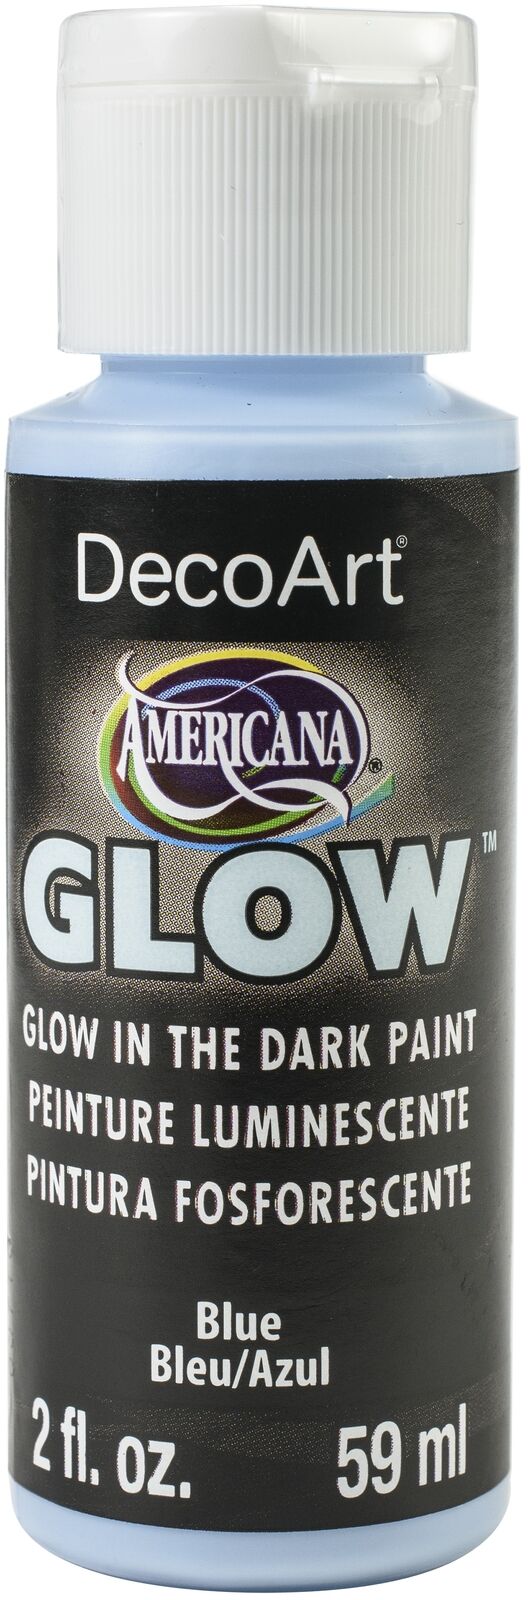 Decoart Americana Glow Paint 2oz